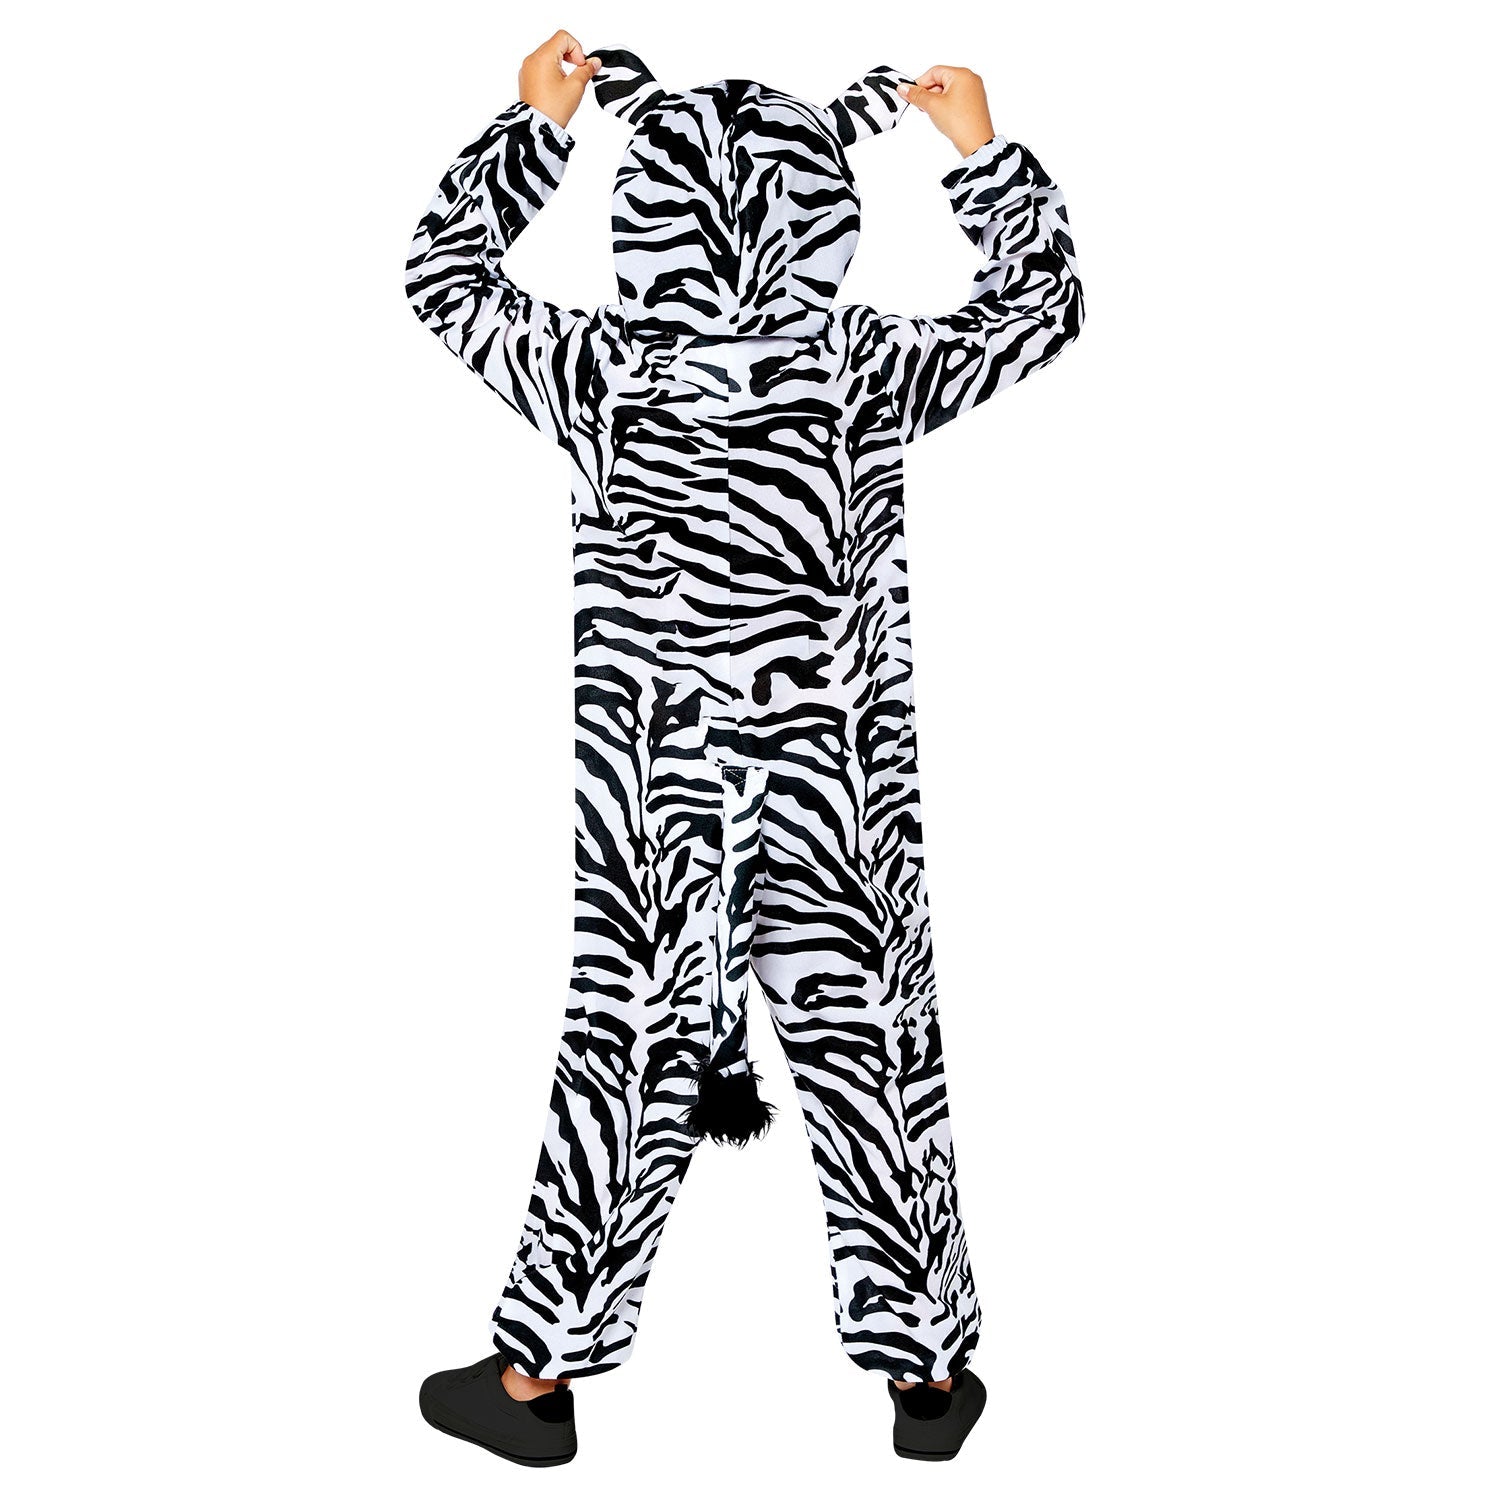 Zebra Onesie Costume includes jumpsuit with hood